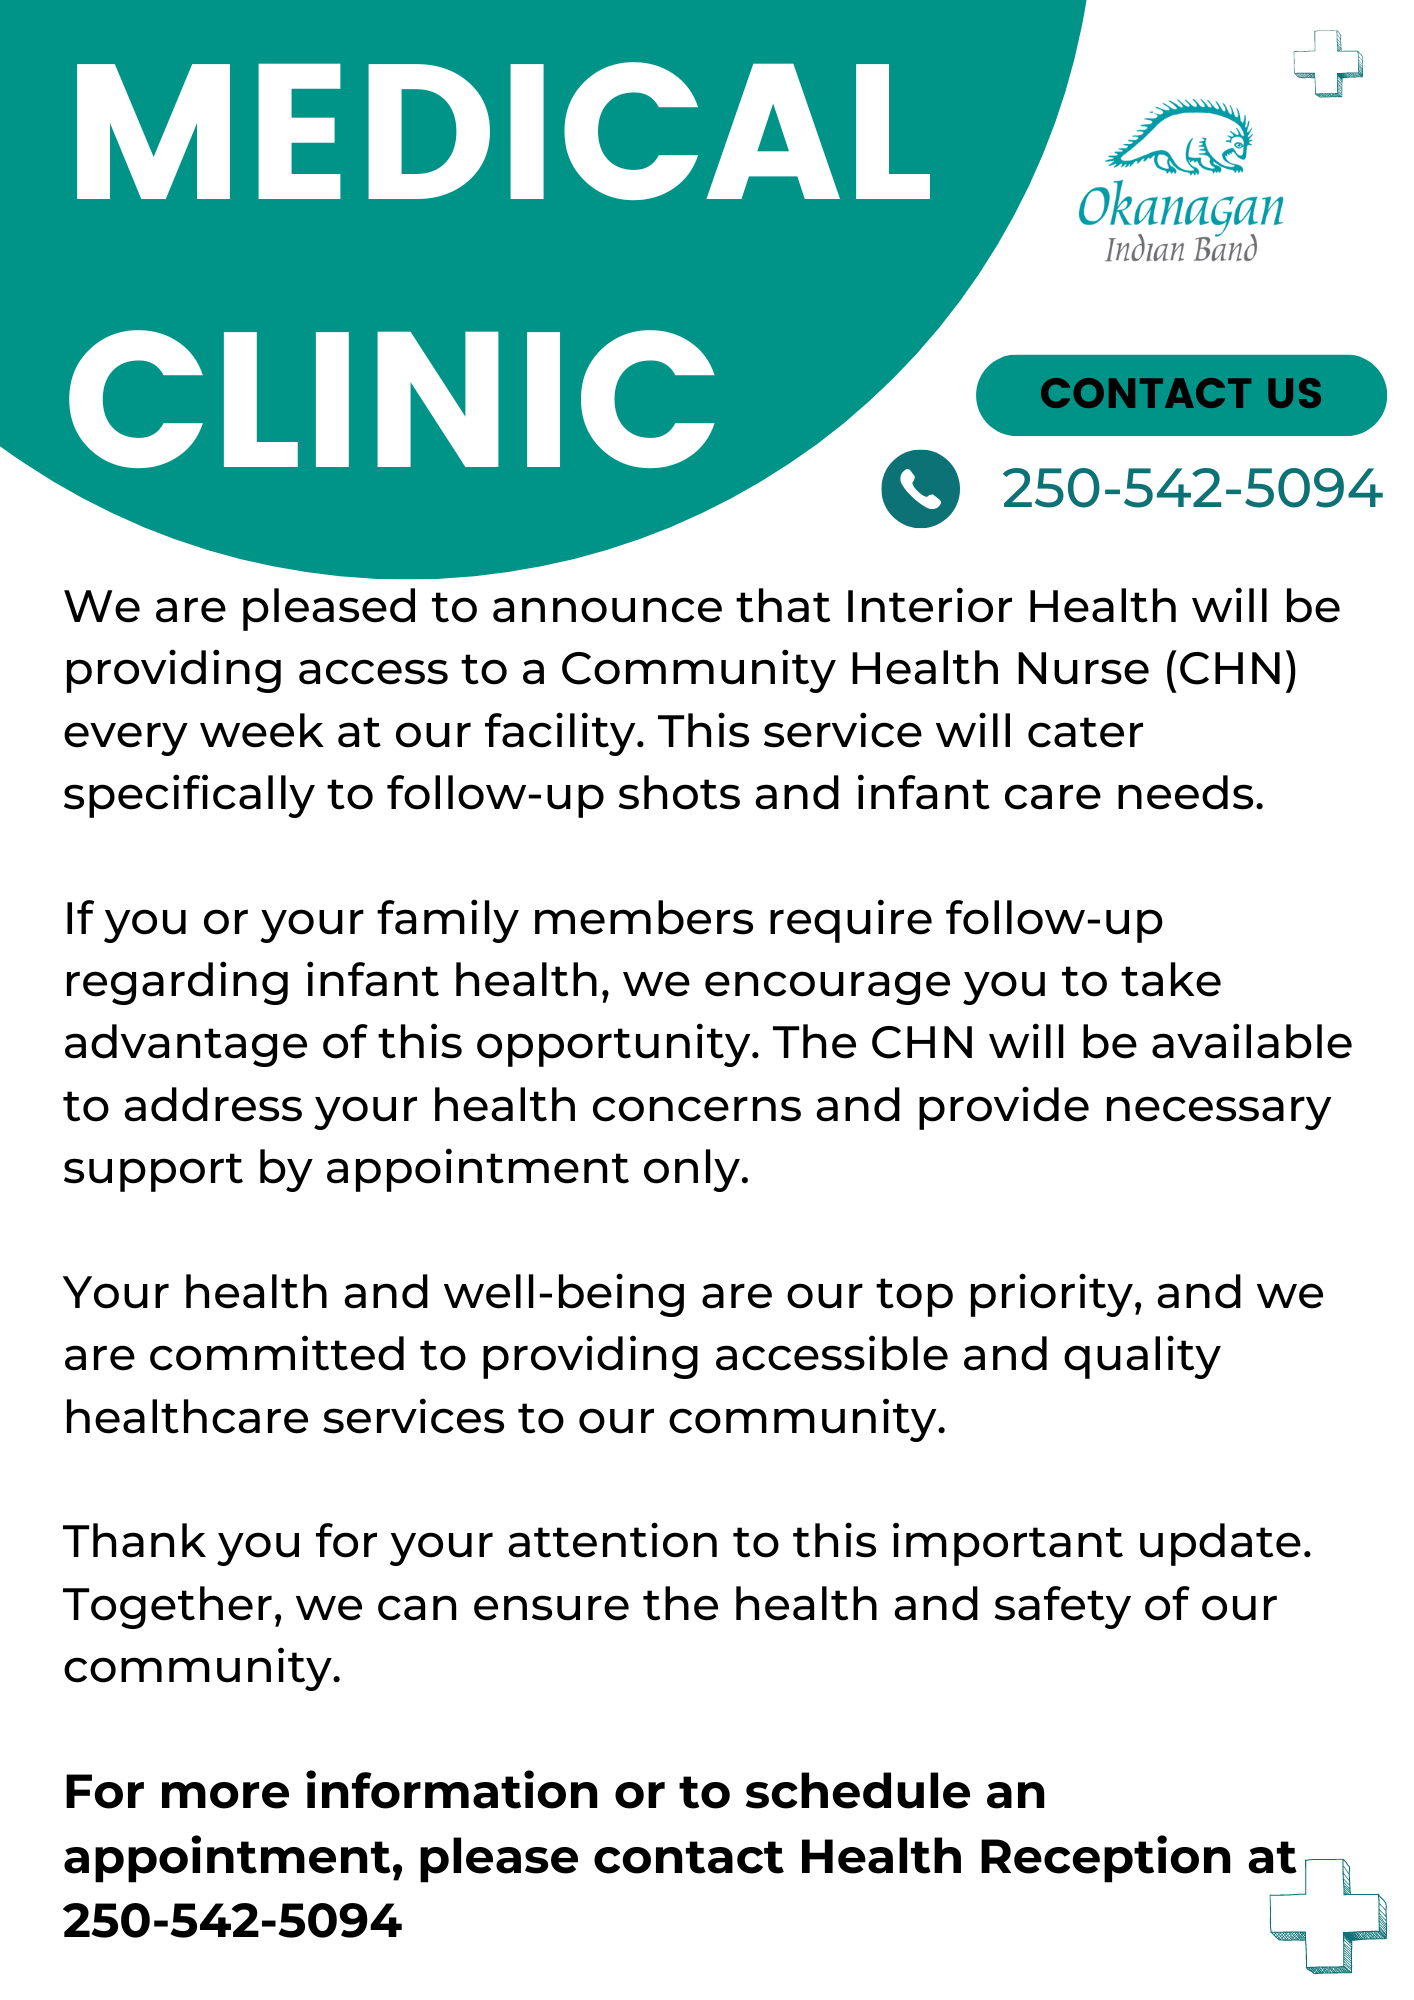 OKIB Medical Clinic Update